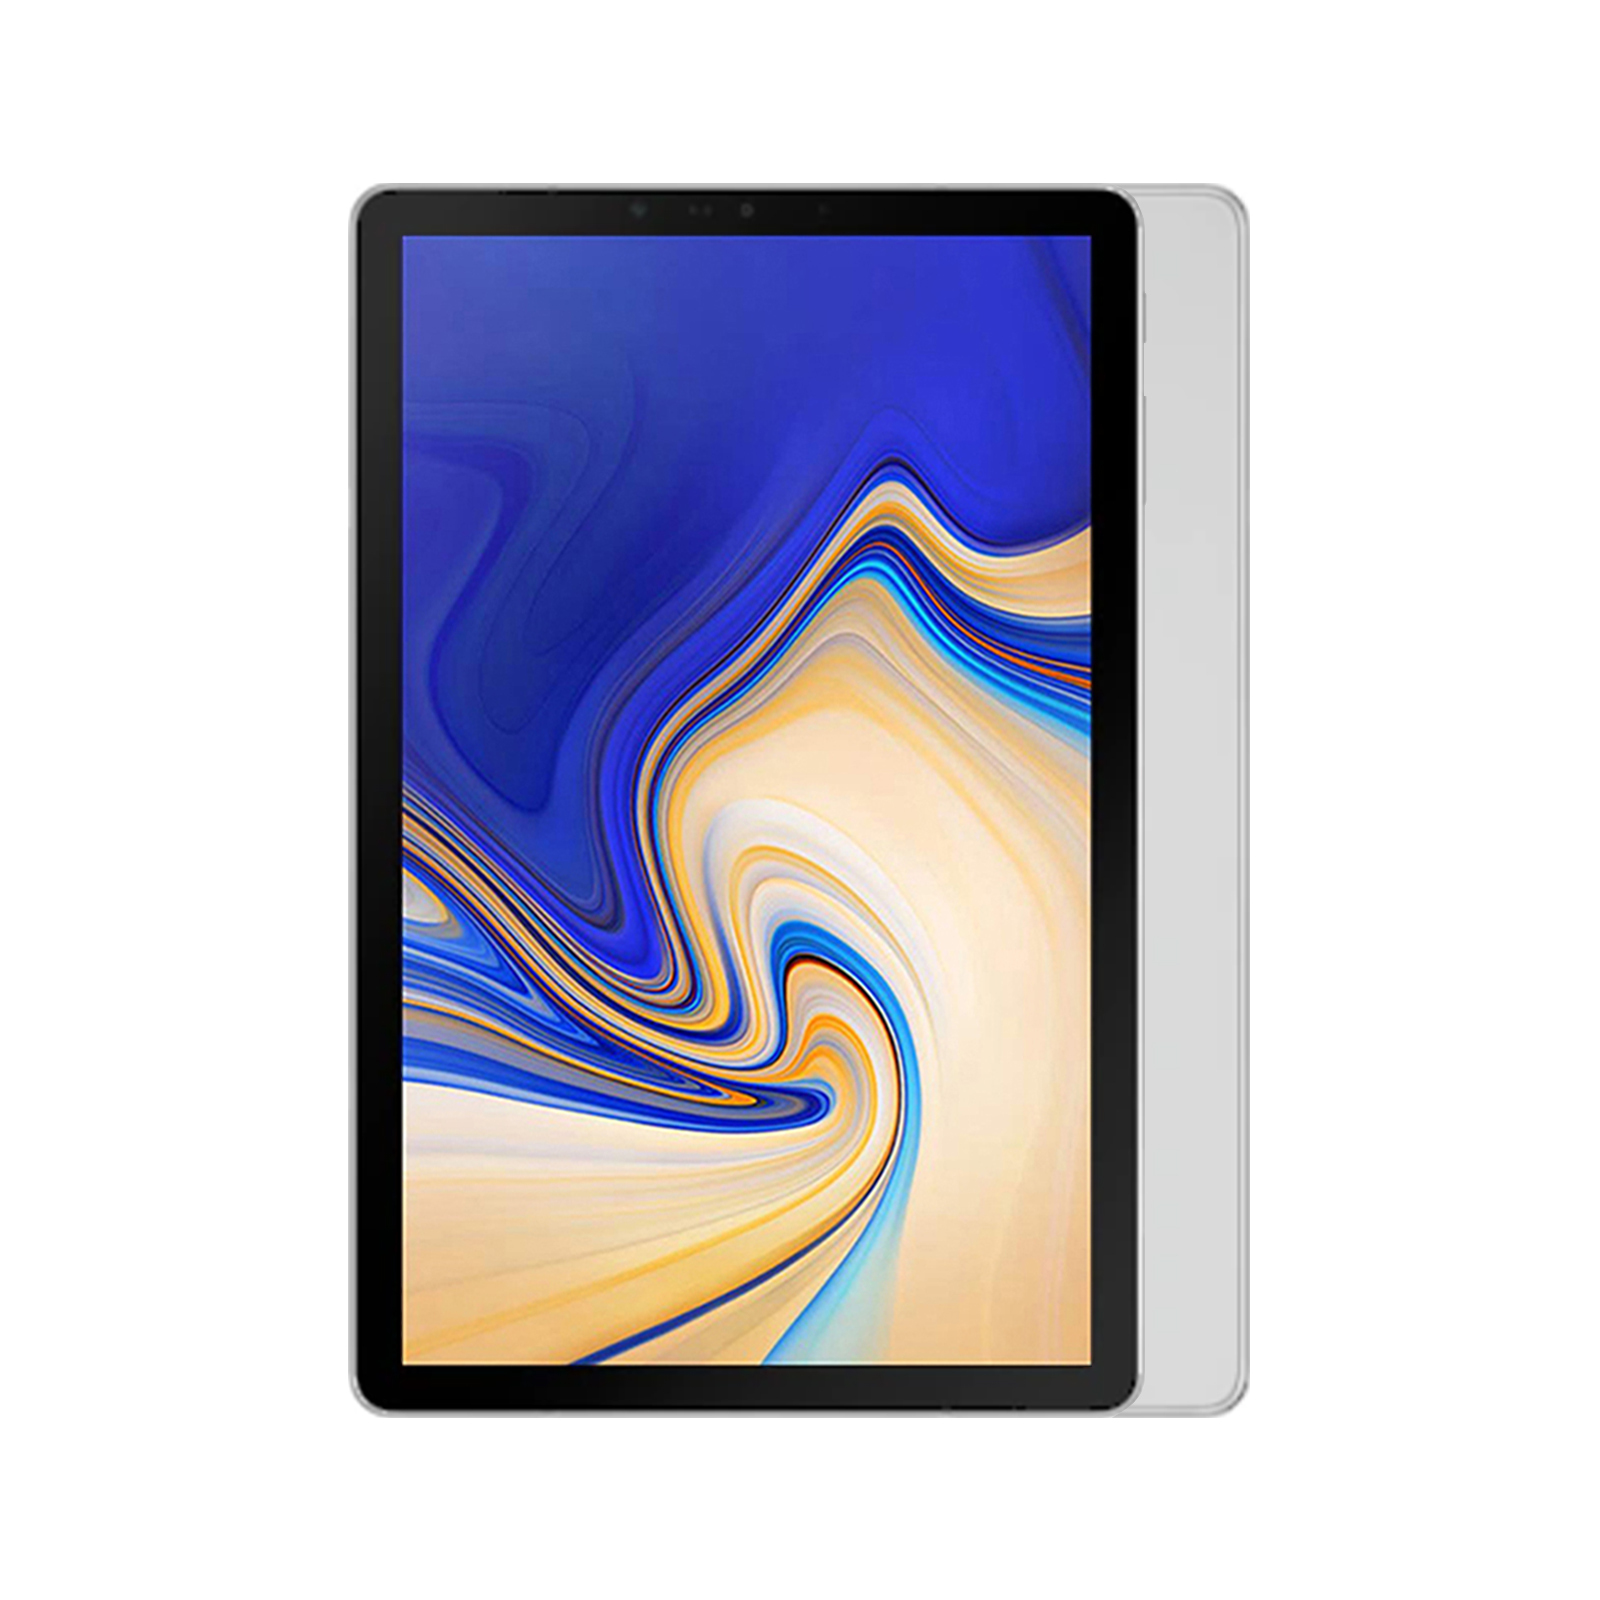 Samsung Galaxy Tab S4 (T830) [WiFi] [64GB] [White] [As New]